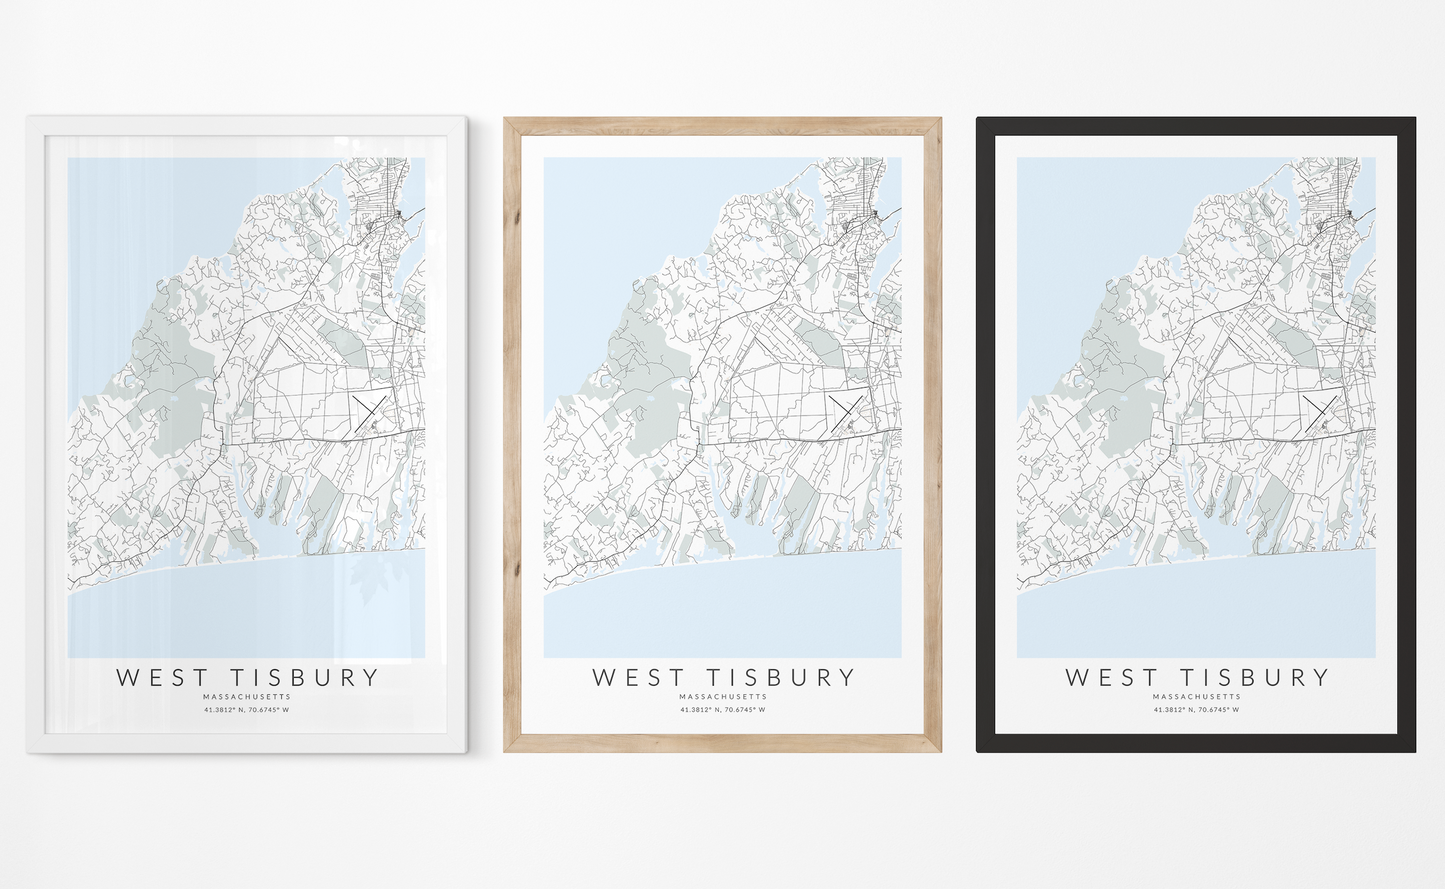 West Tisbury Map Print